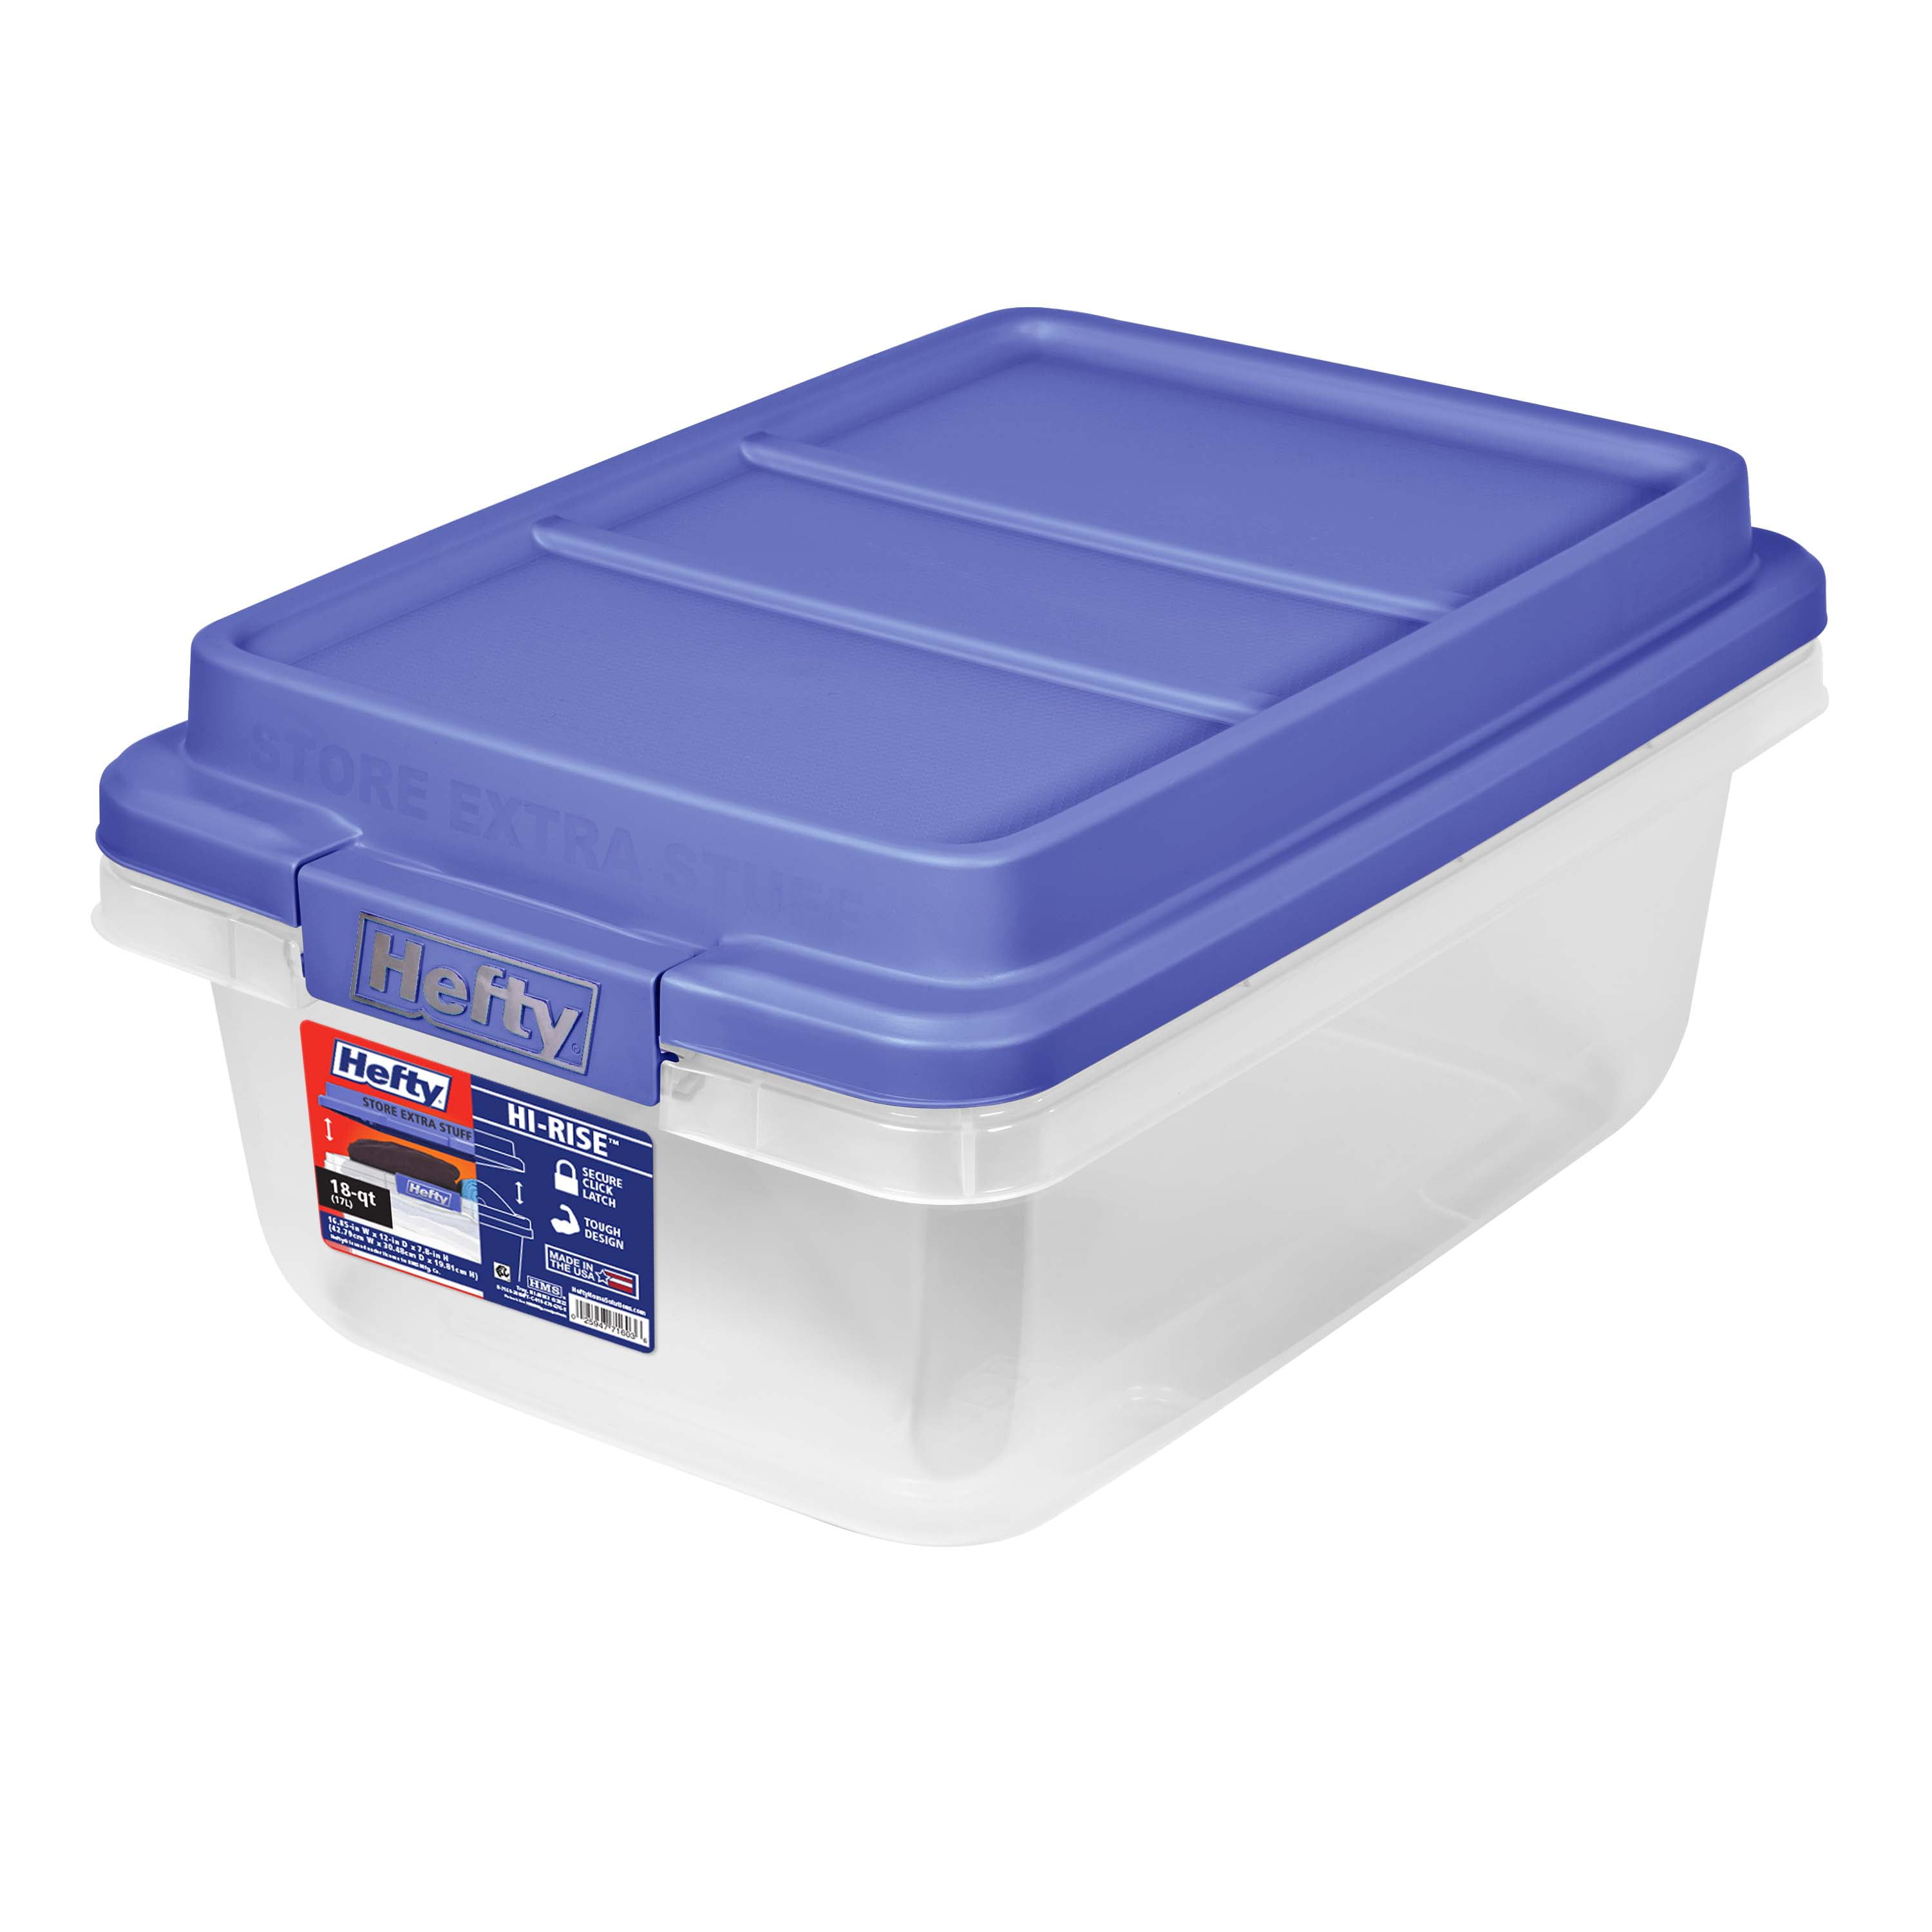 Hefty 18 Qt. Clear Storage Bin with Blue HI-RISE Lidstorage